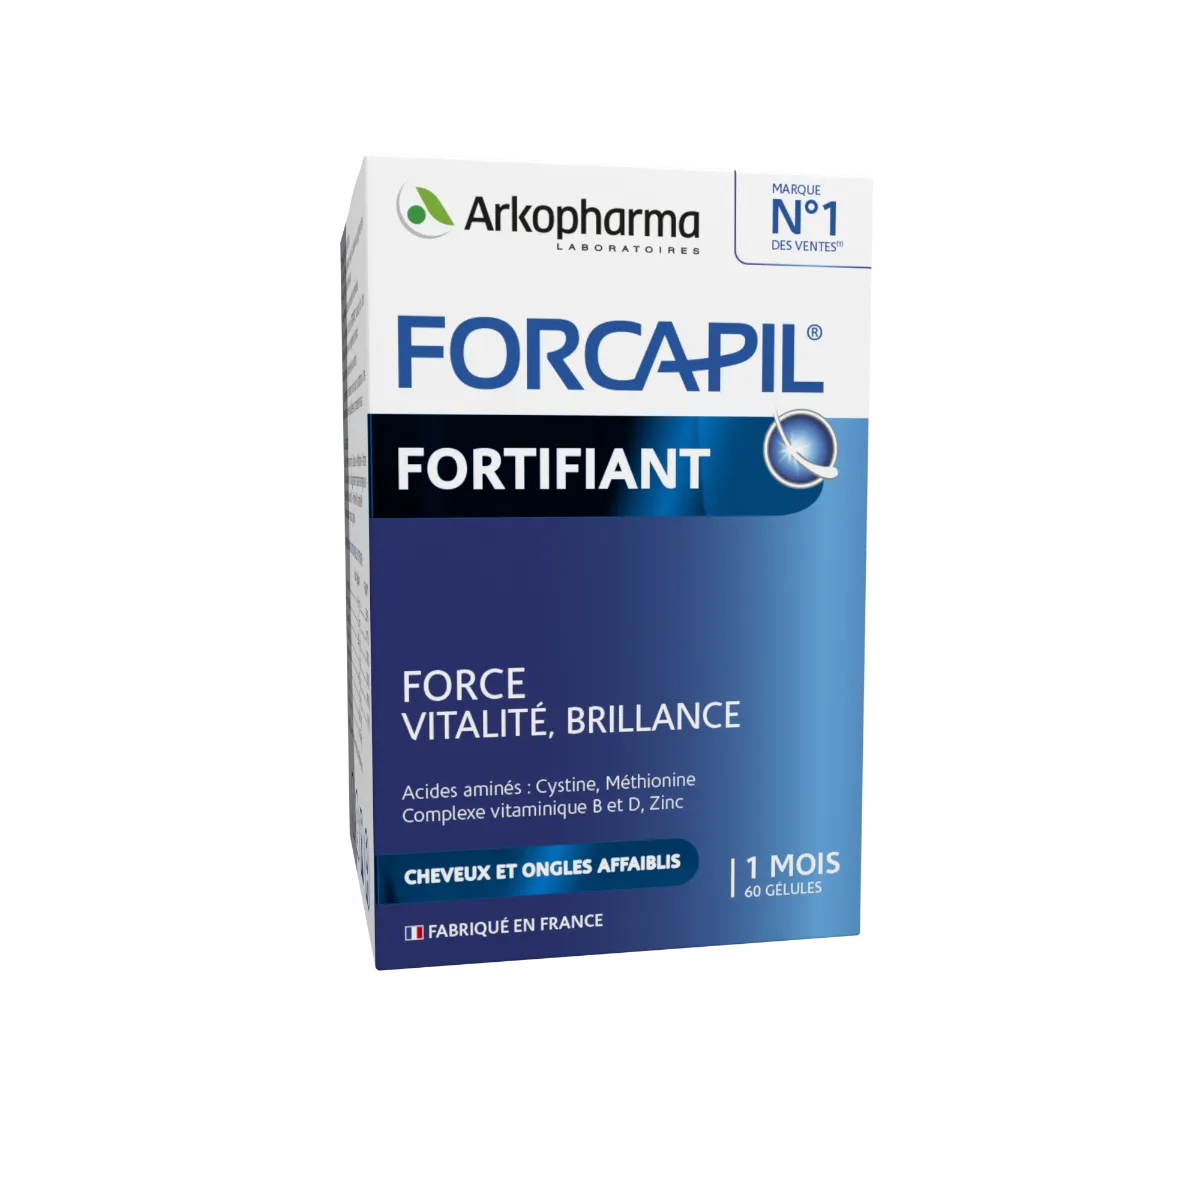 arkopharma-forcapil-fortifiant-60-gélules-3578830123604